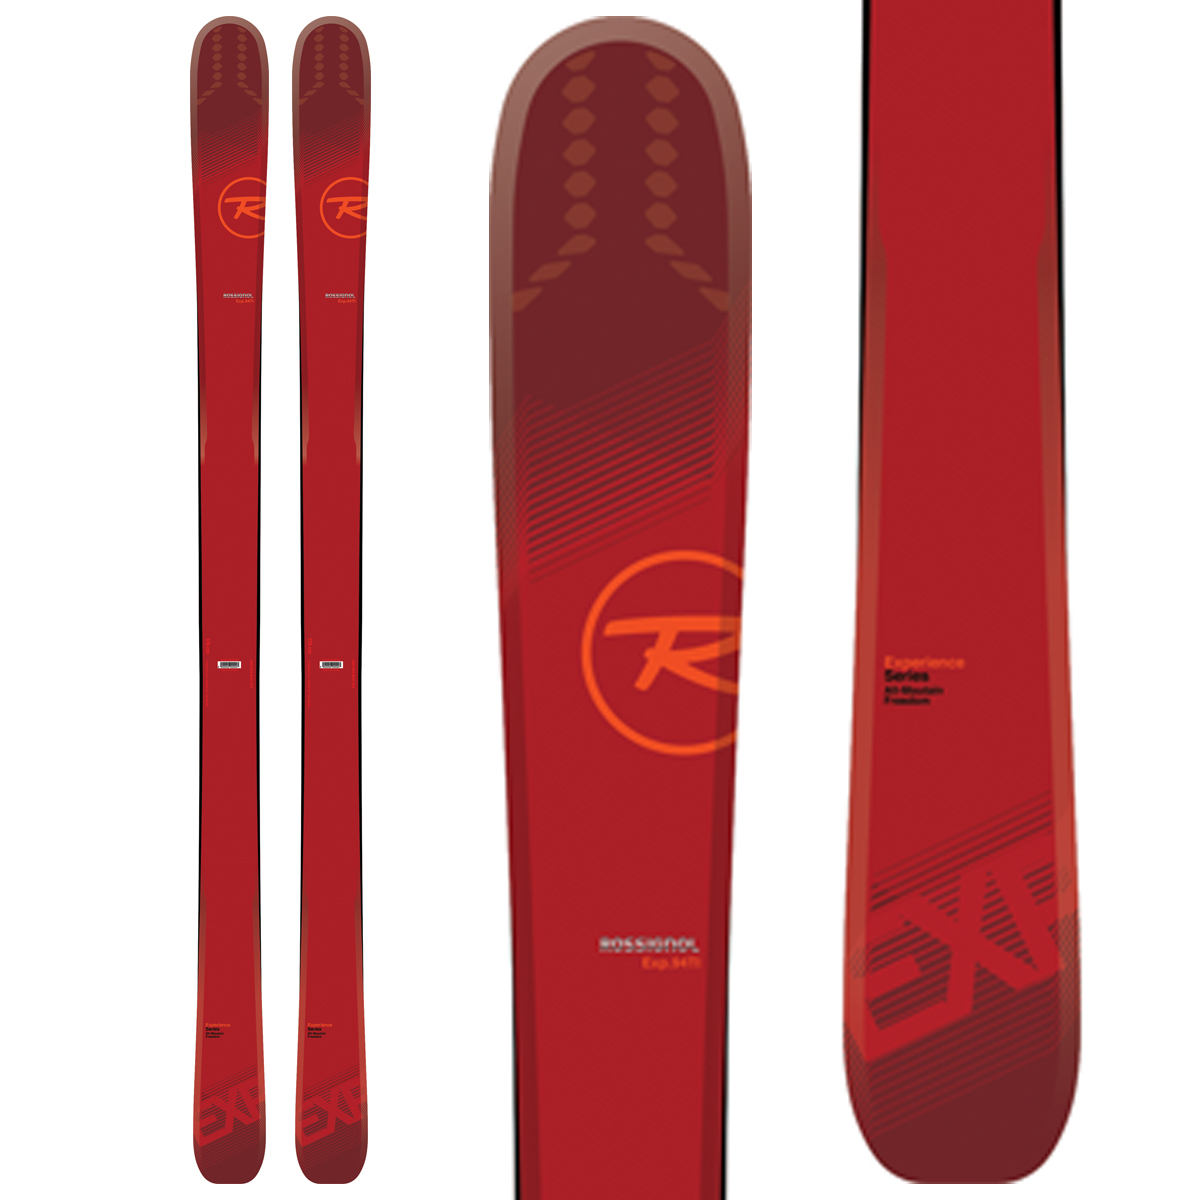 ebay rossignol skis